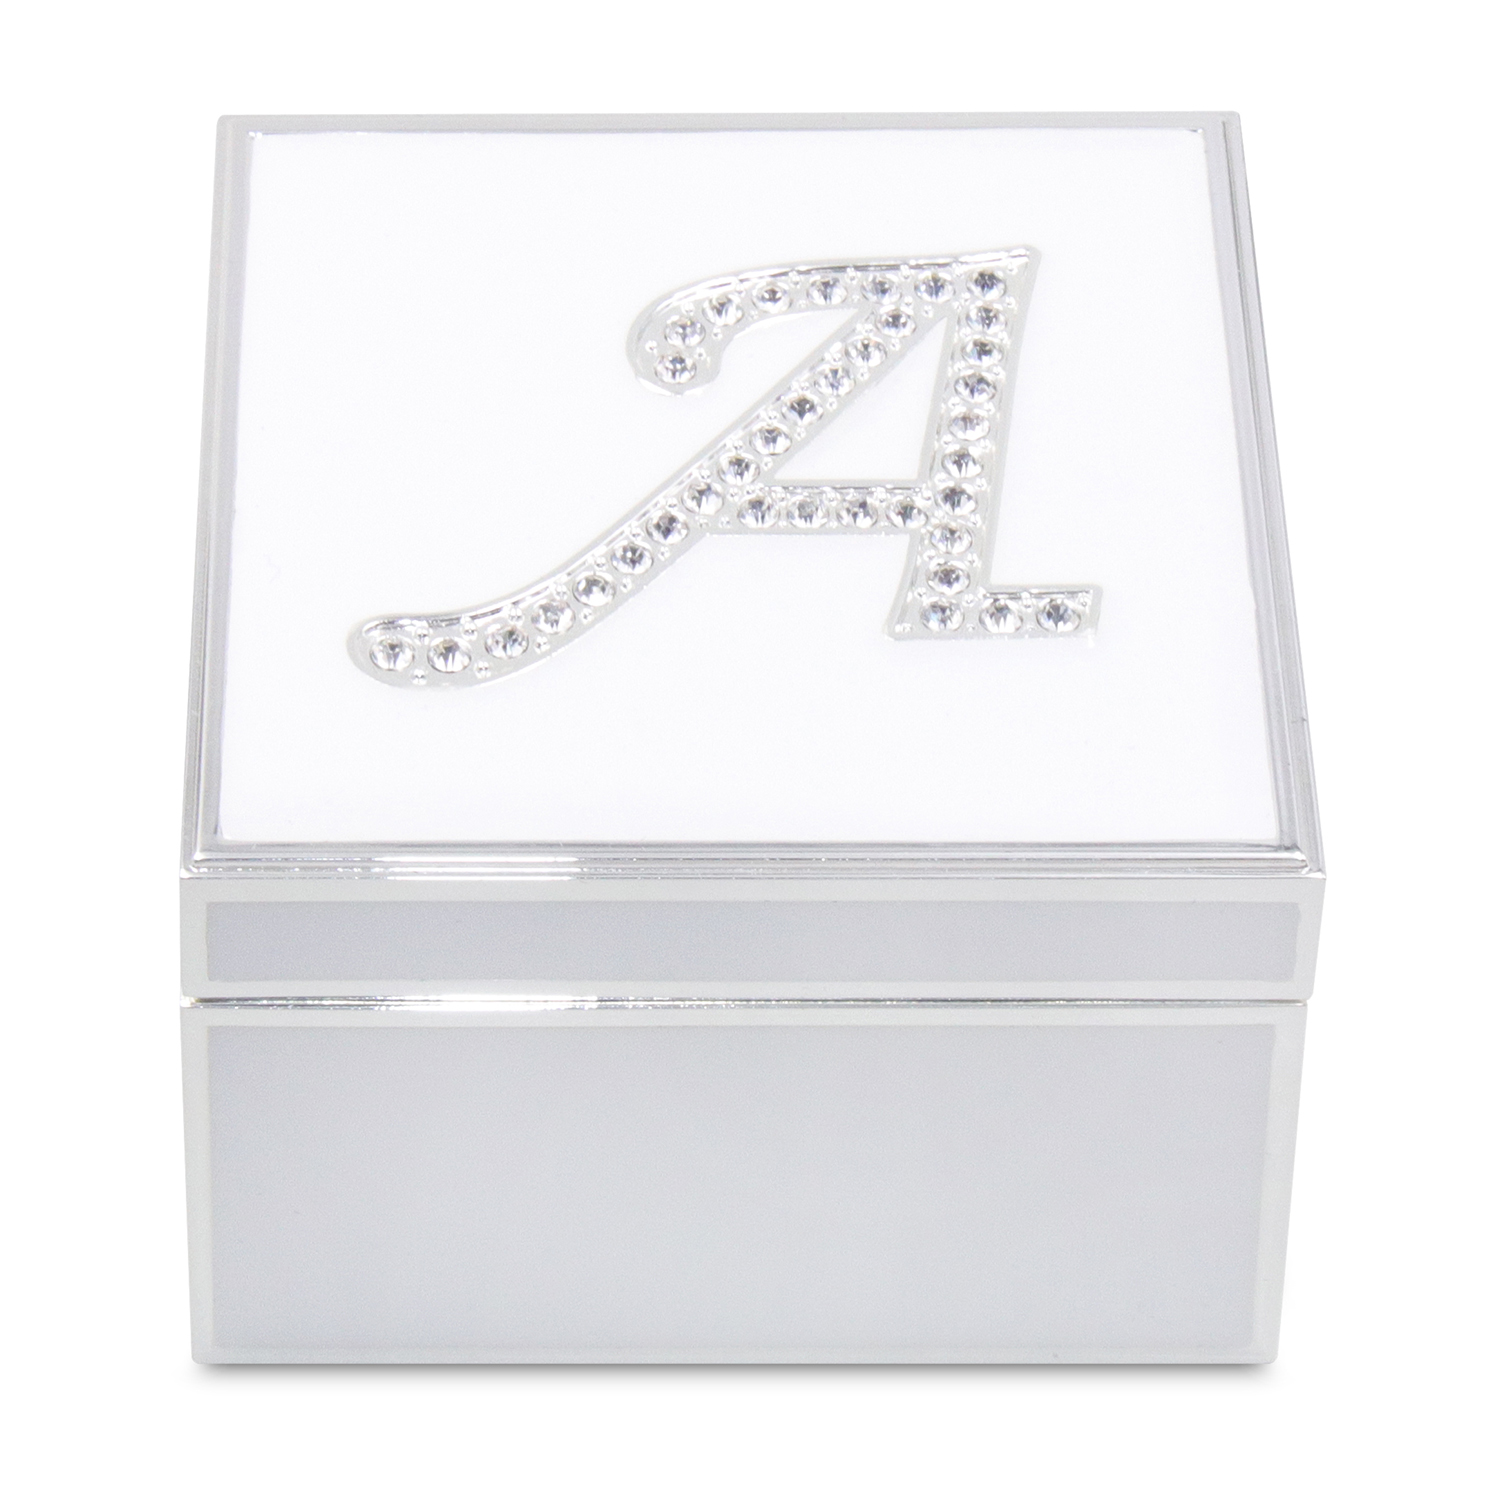 Square letter A jewellery box